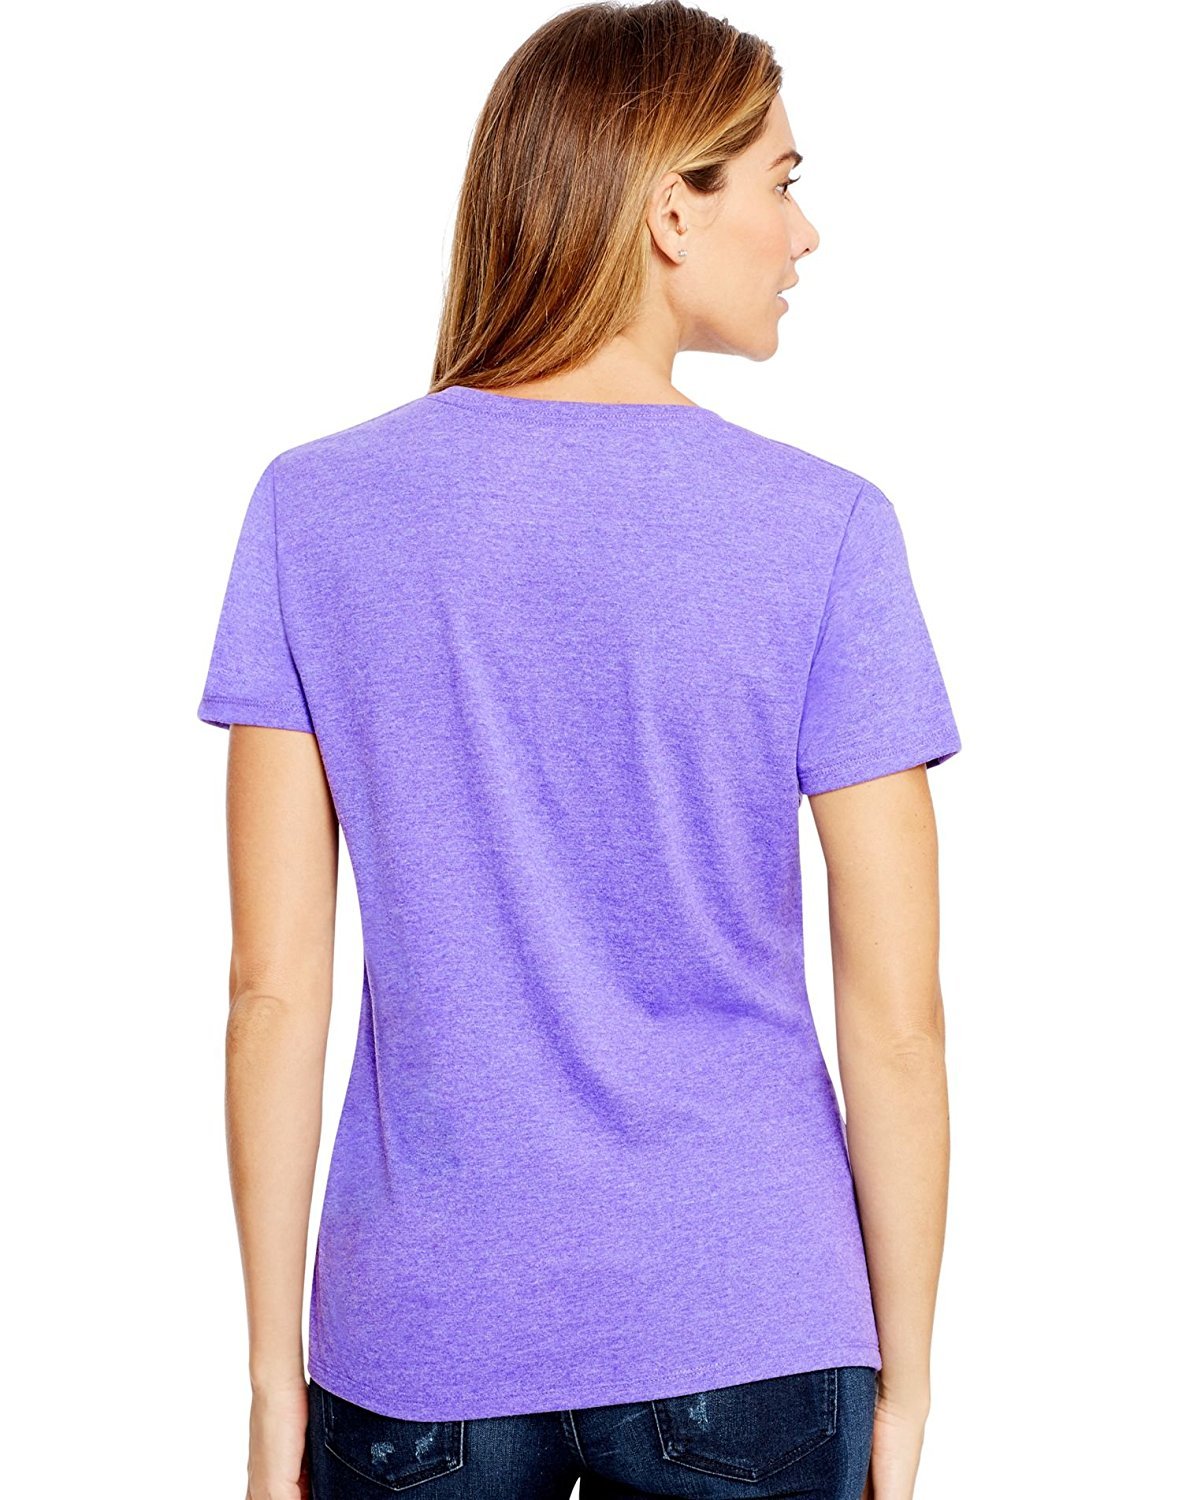 Hanes 42VT Ladies' X-Temp® Triblend V-Neck T-Shirt